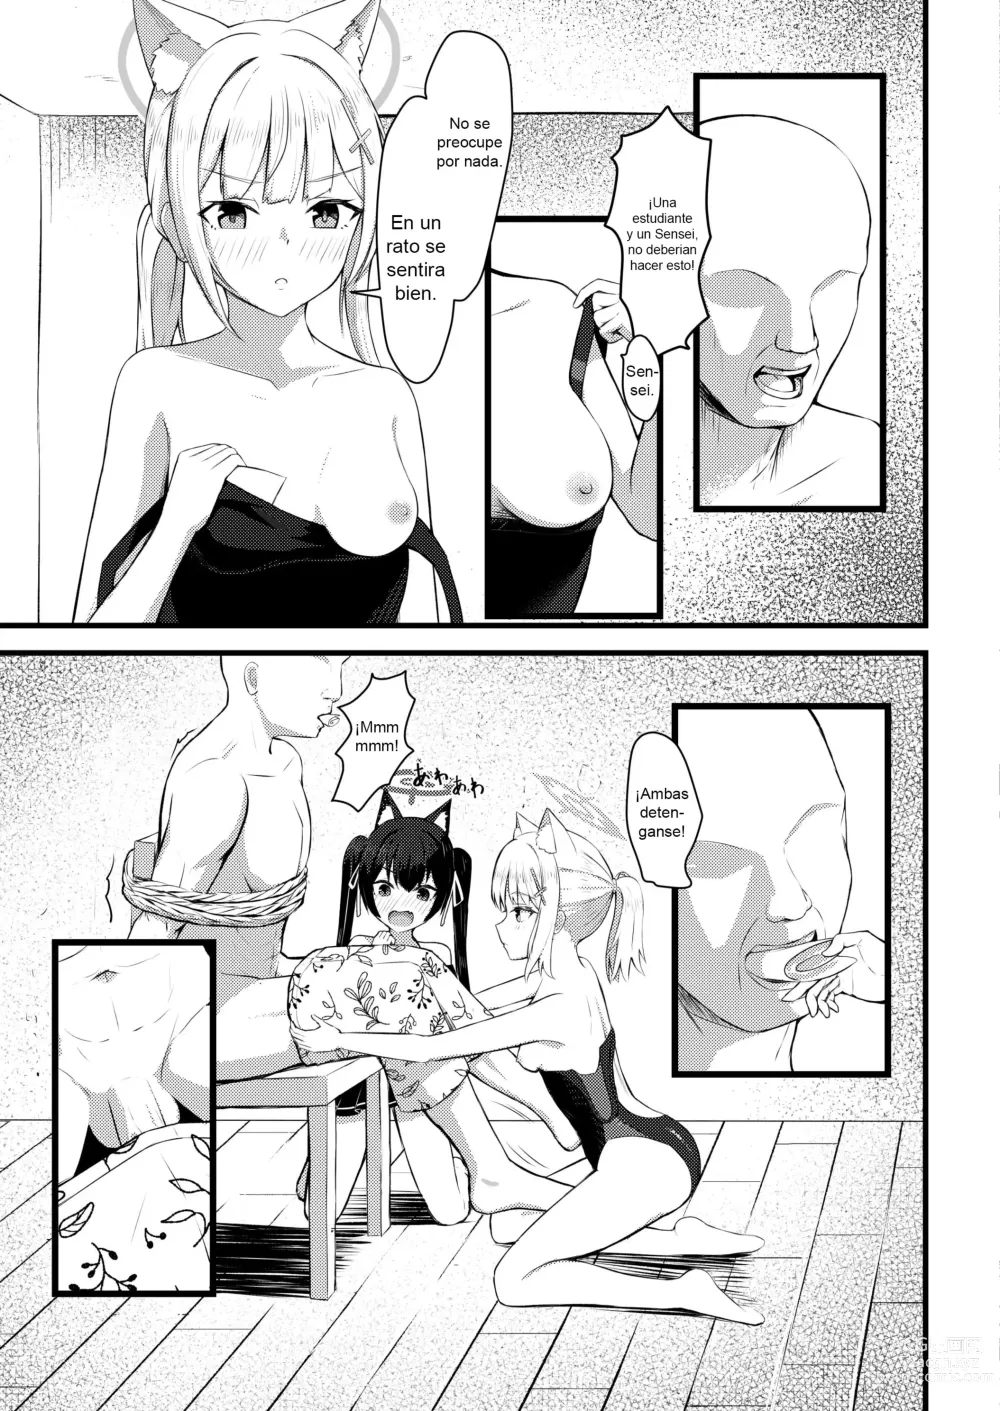 Page 6 of doujinshi ...Hm, Sensei o Osou no.